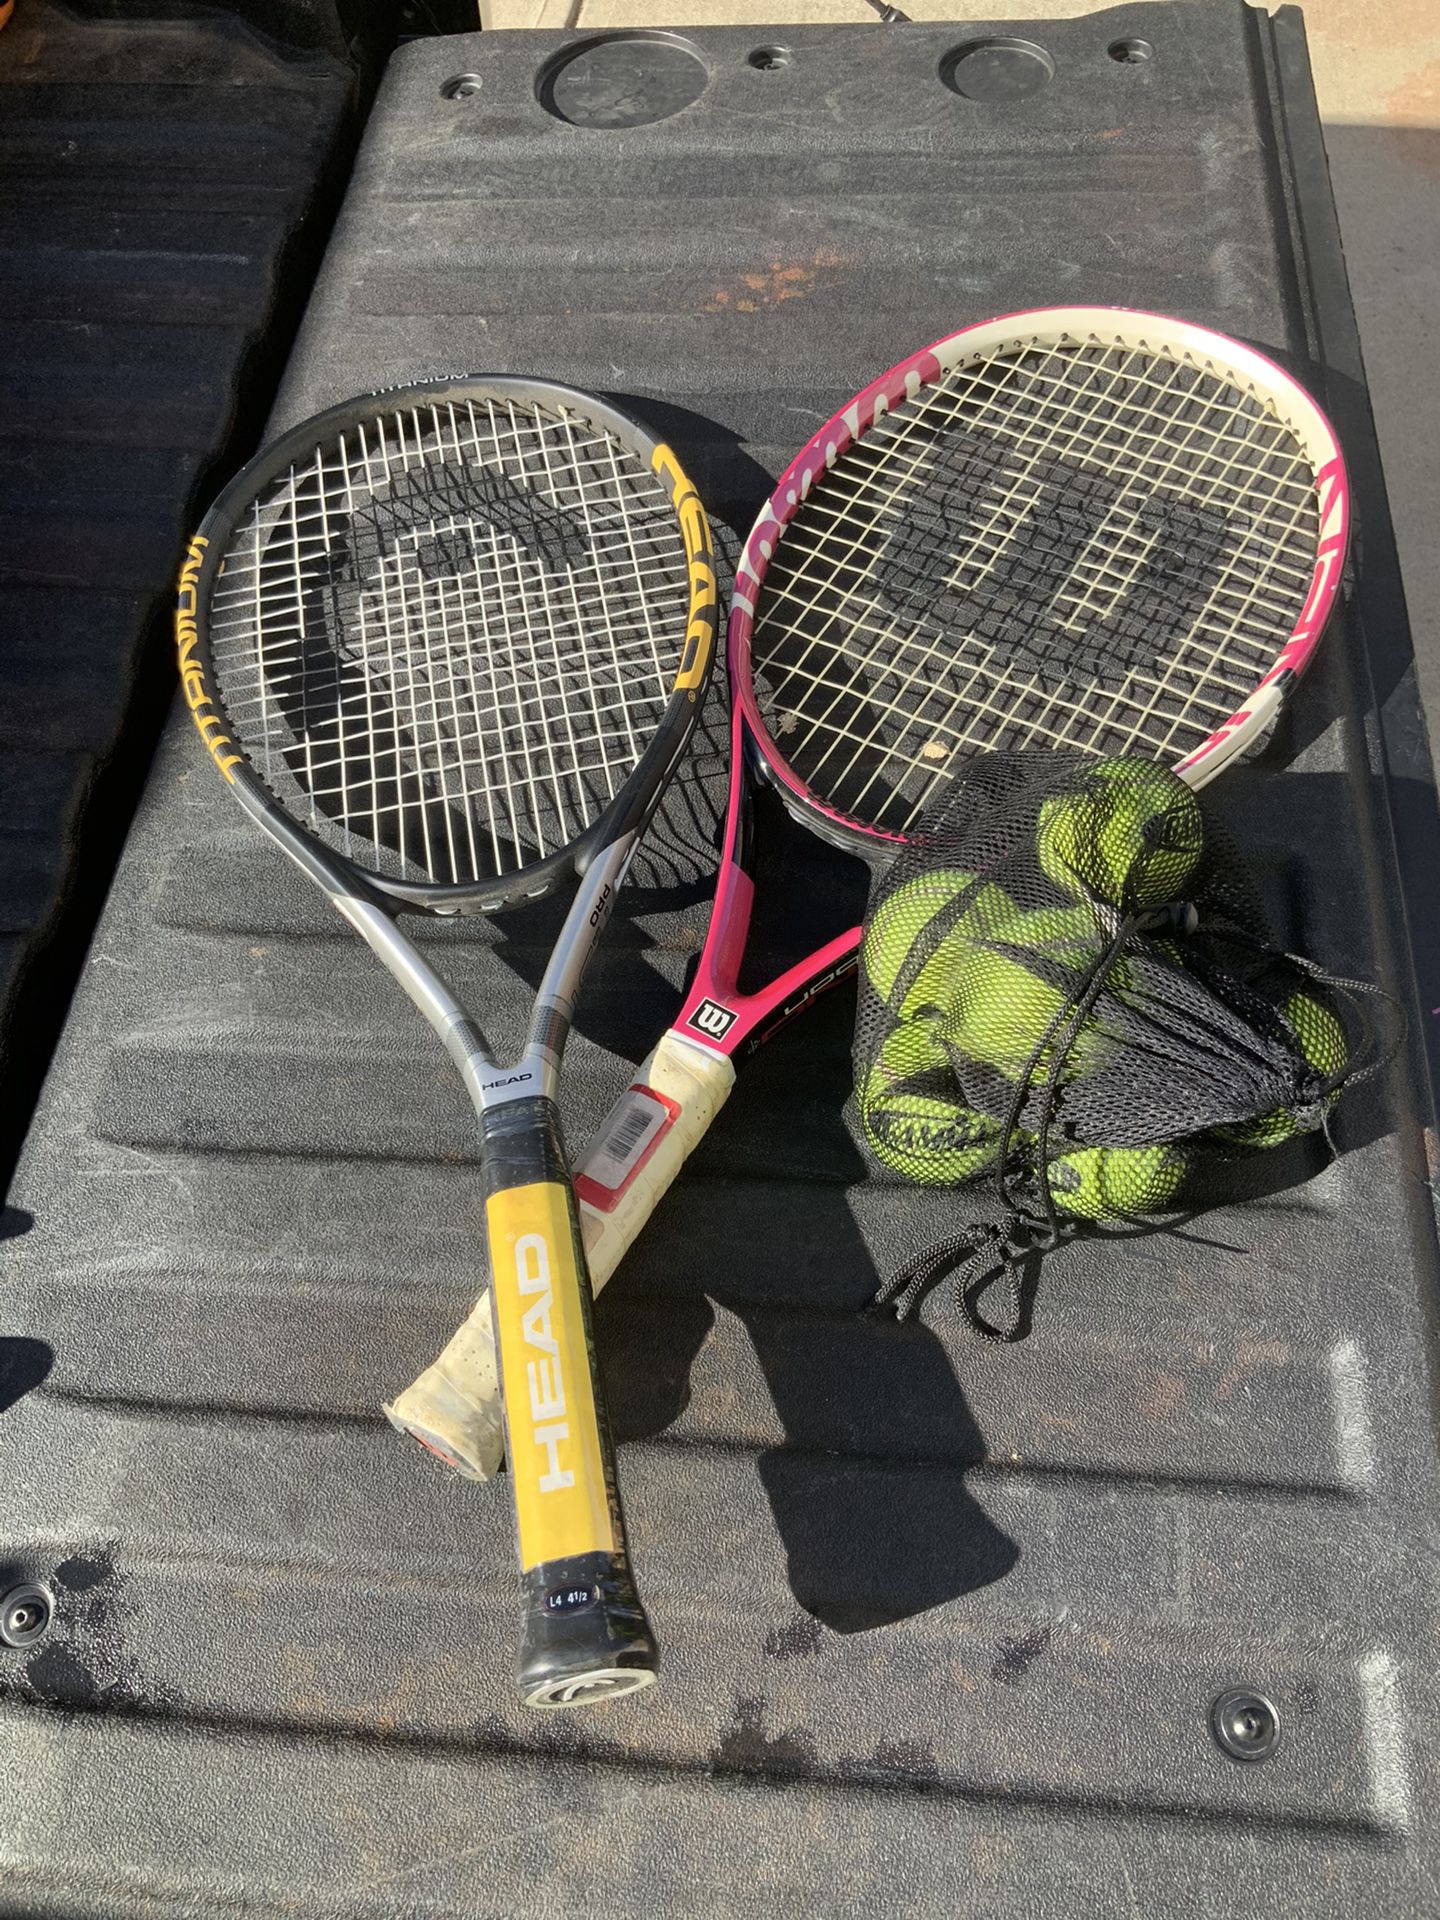 Tennis Rackets And Balls